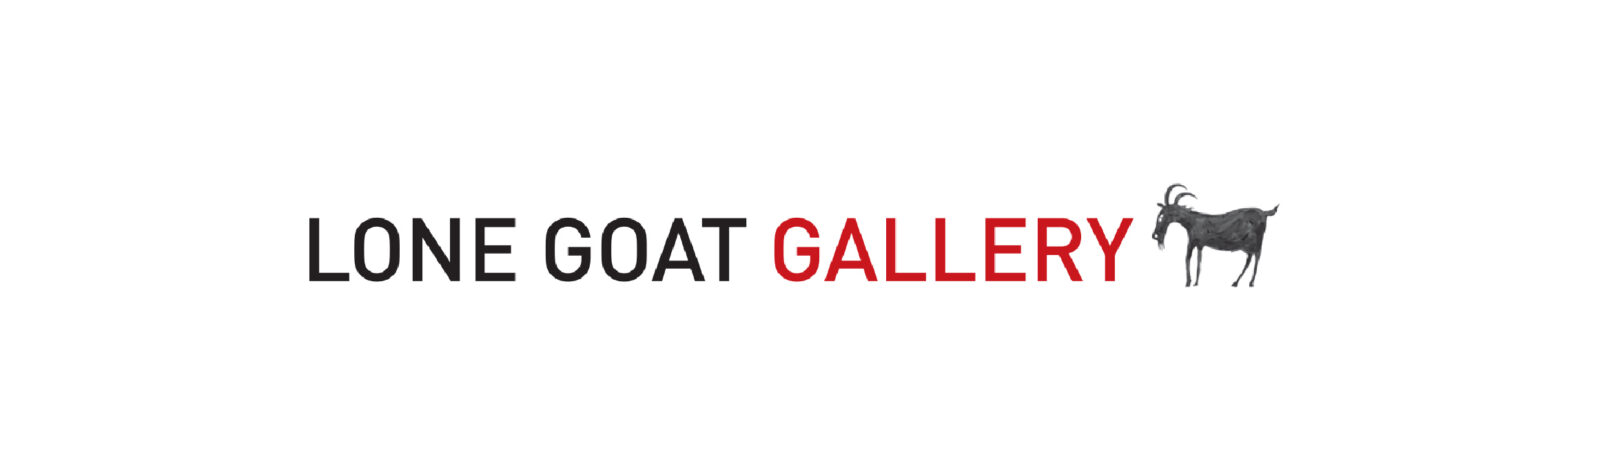 Lone Goat Gallery